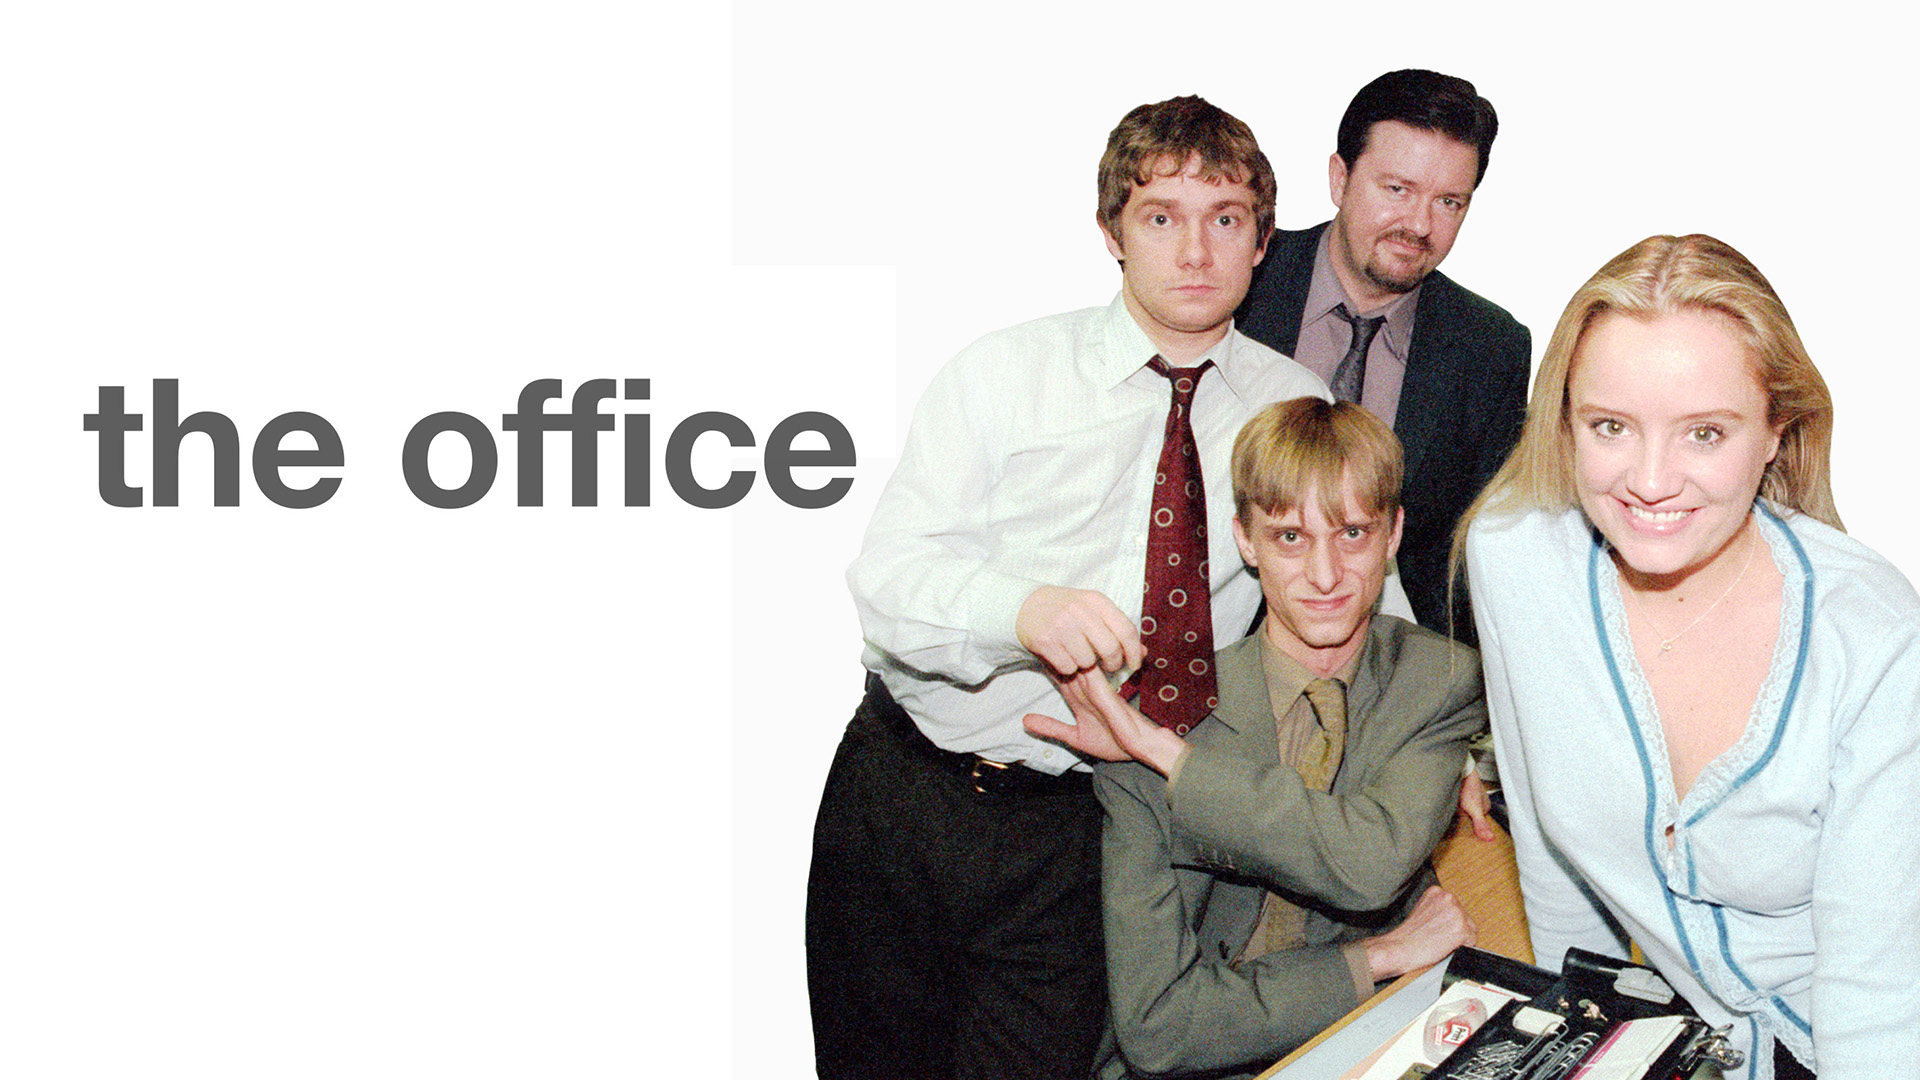 the office season 2 free online stream